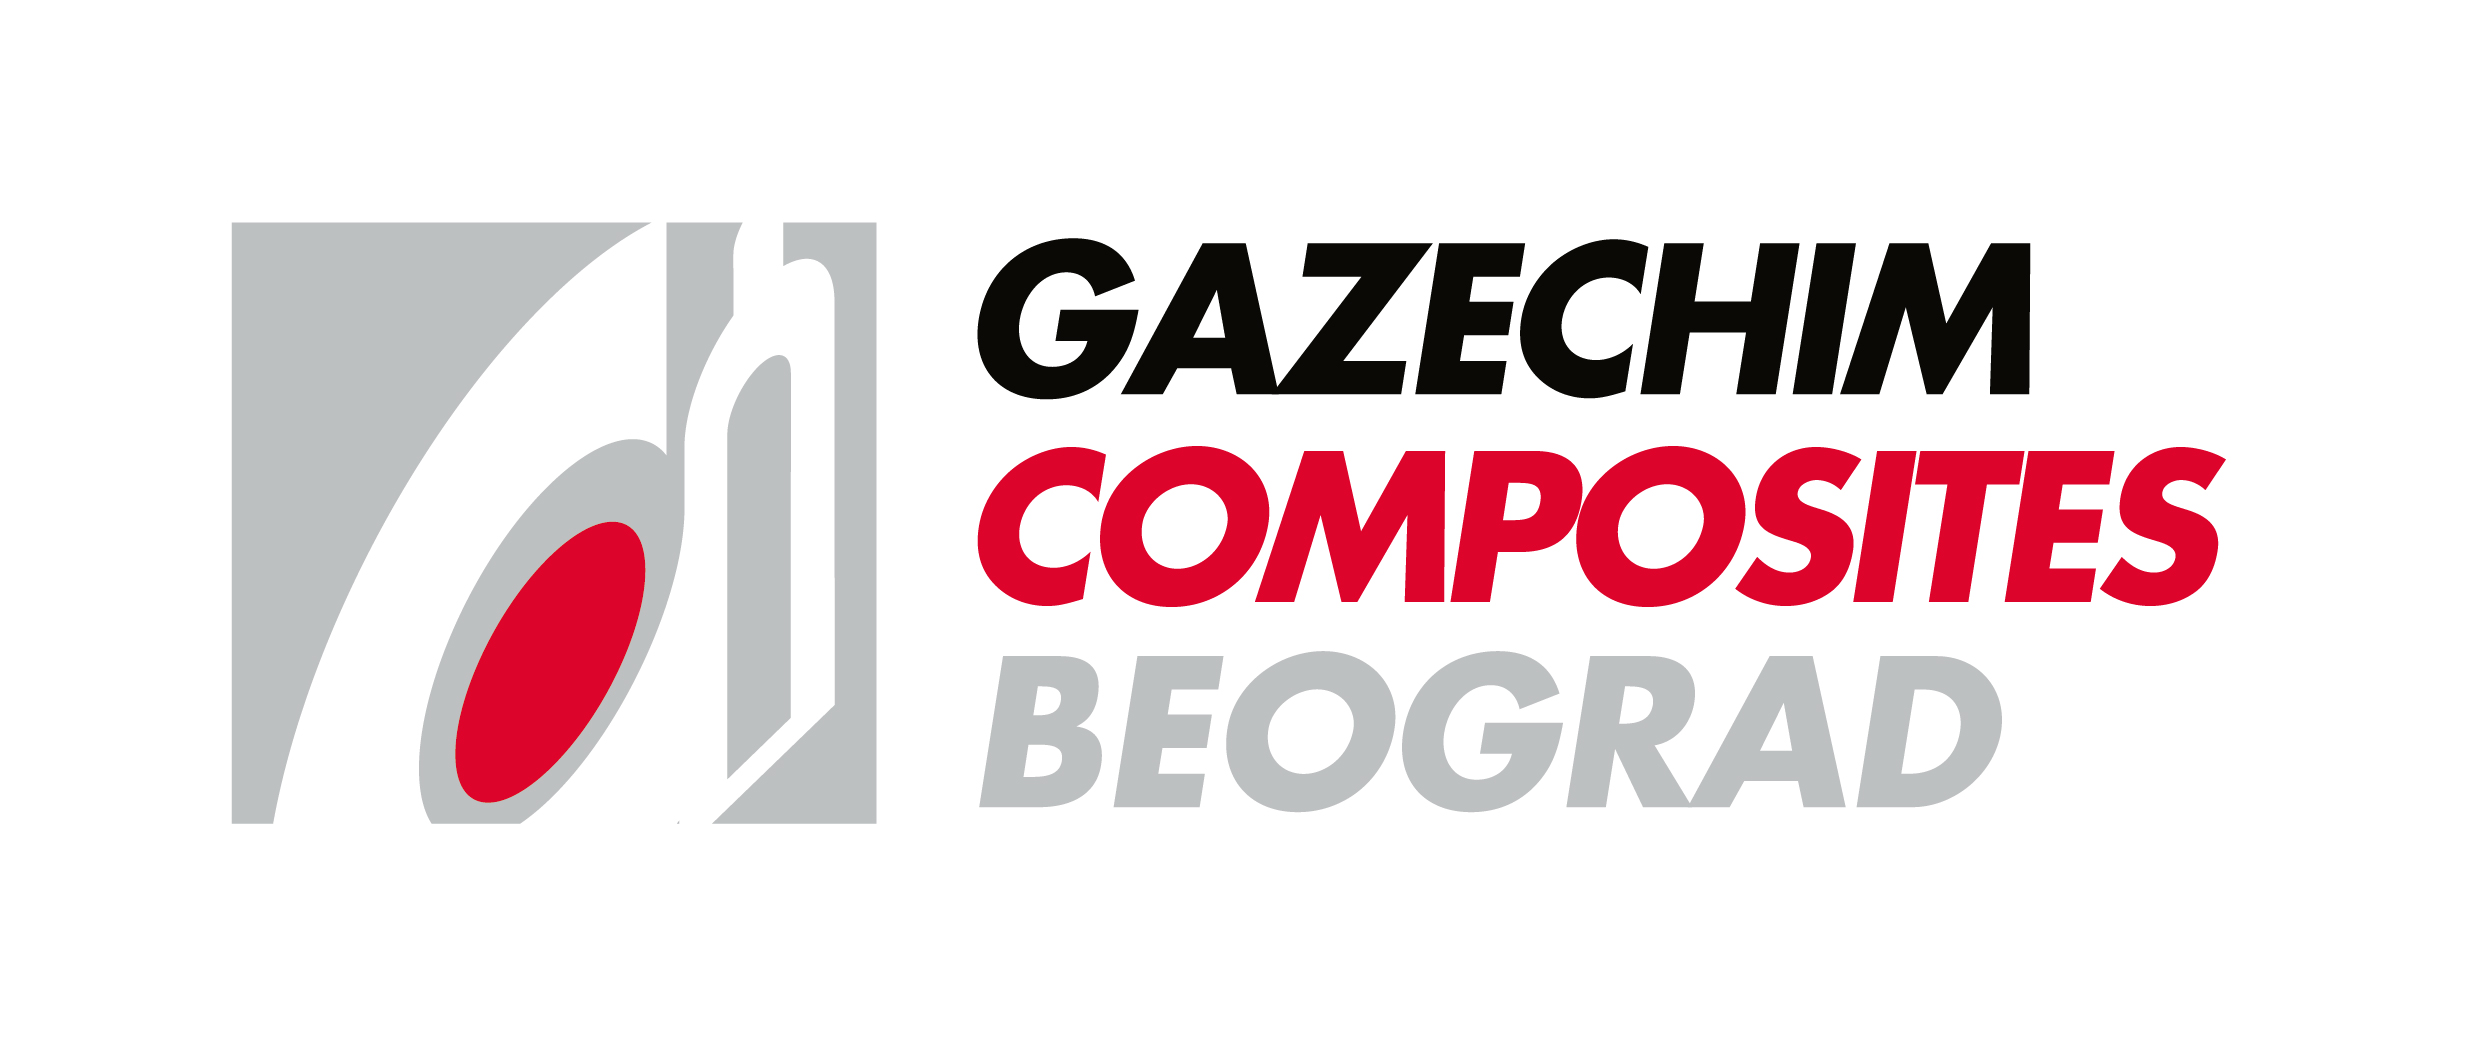 Gazechim Composites Beograd